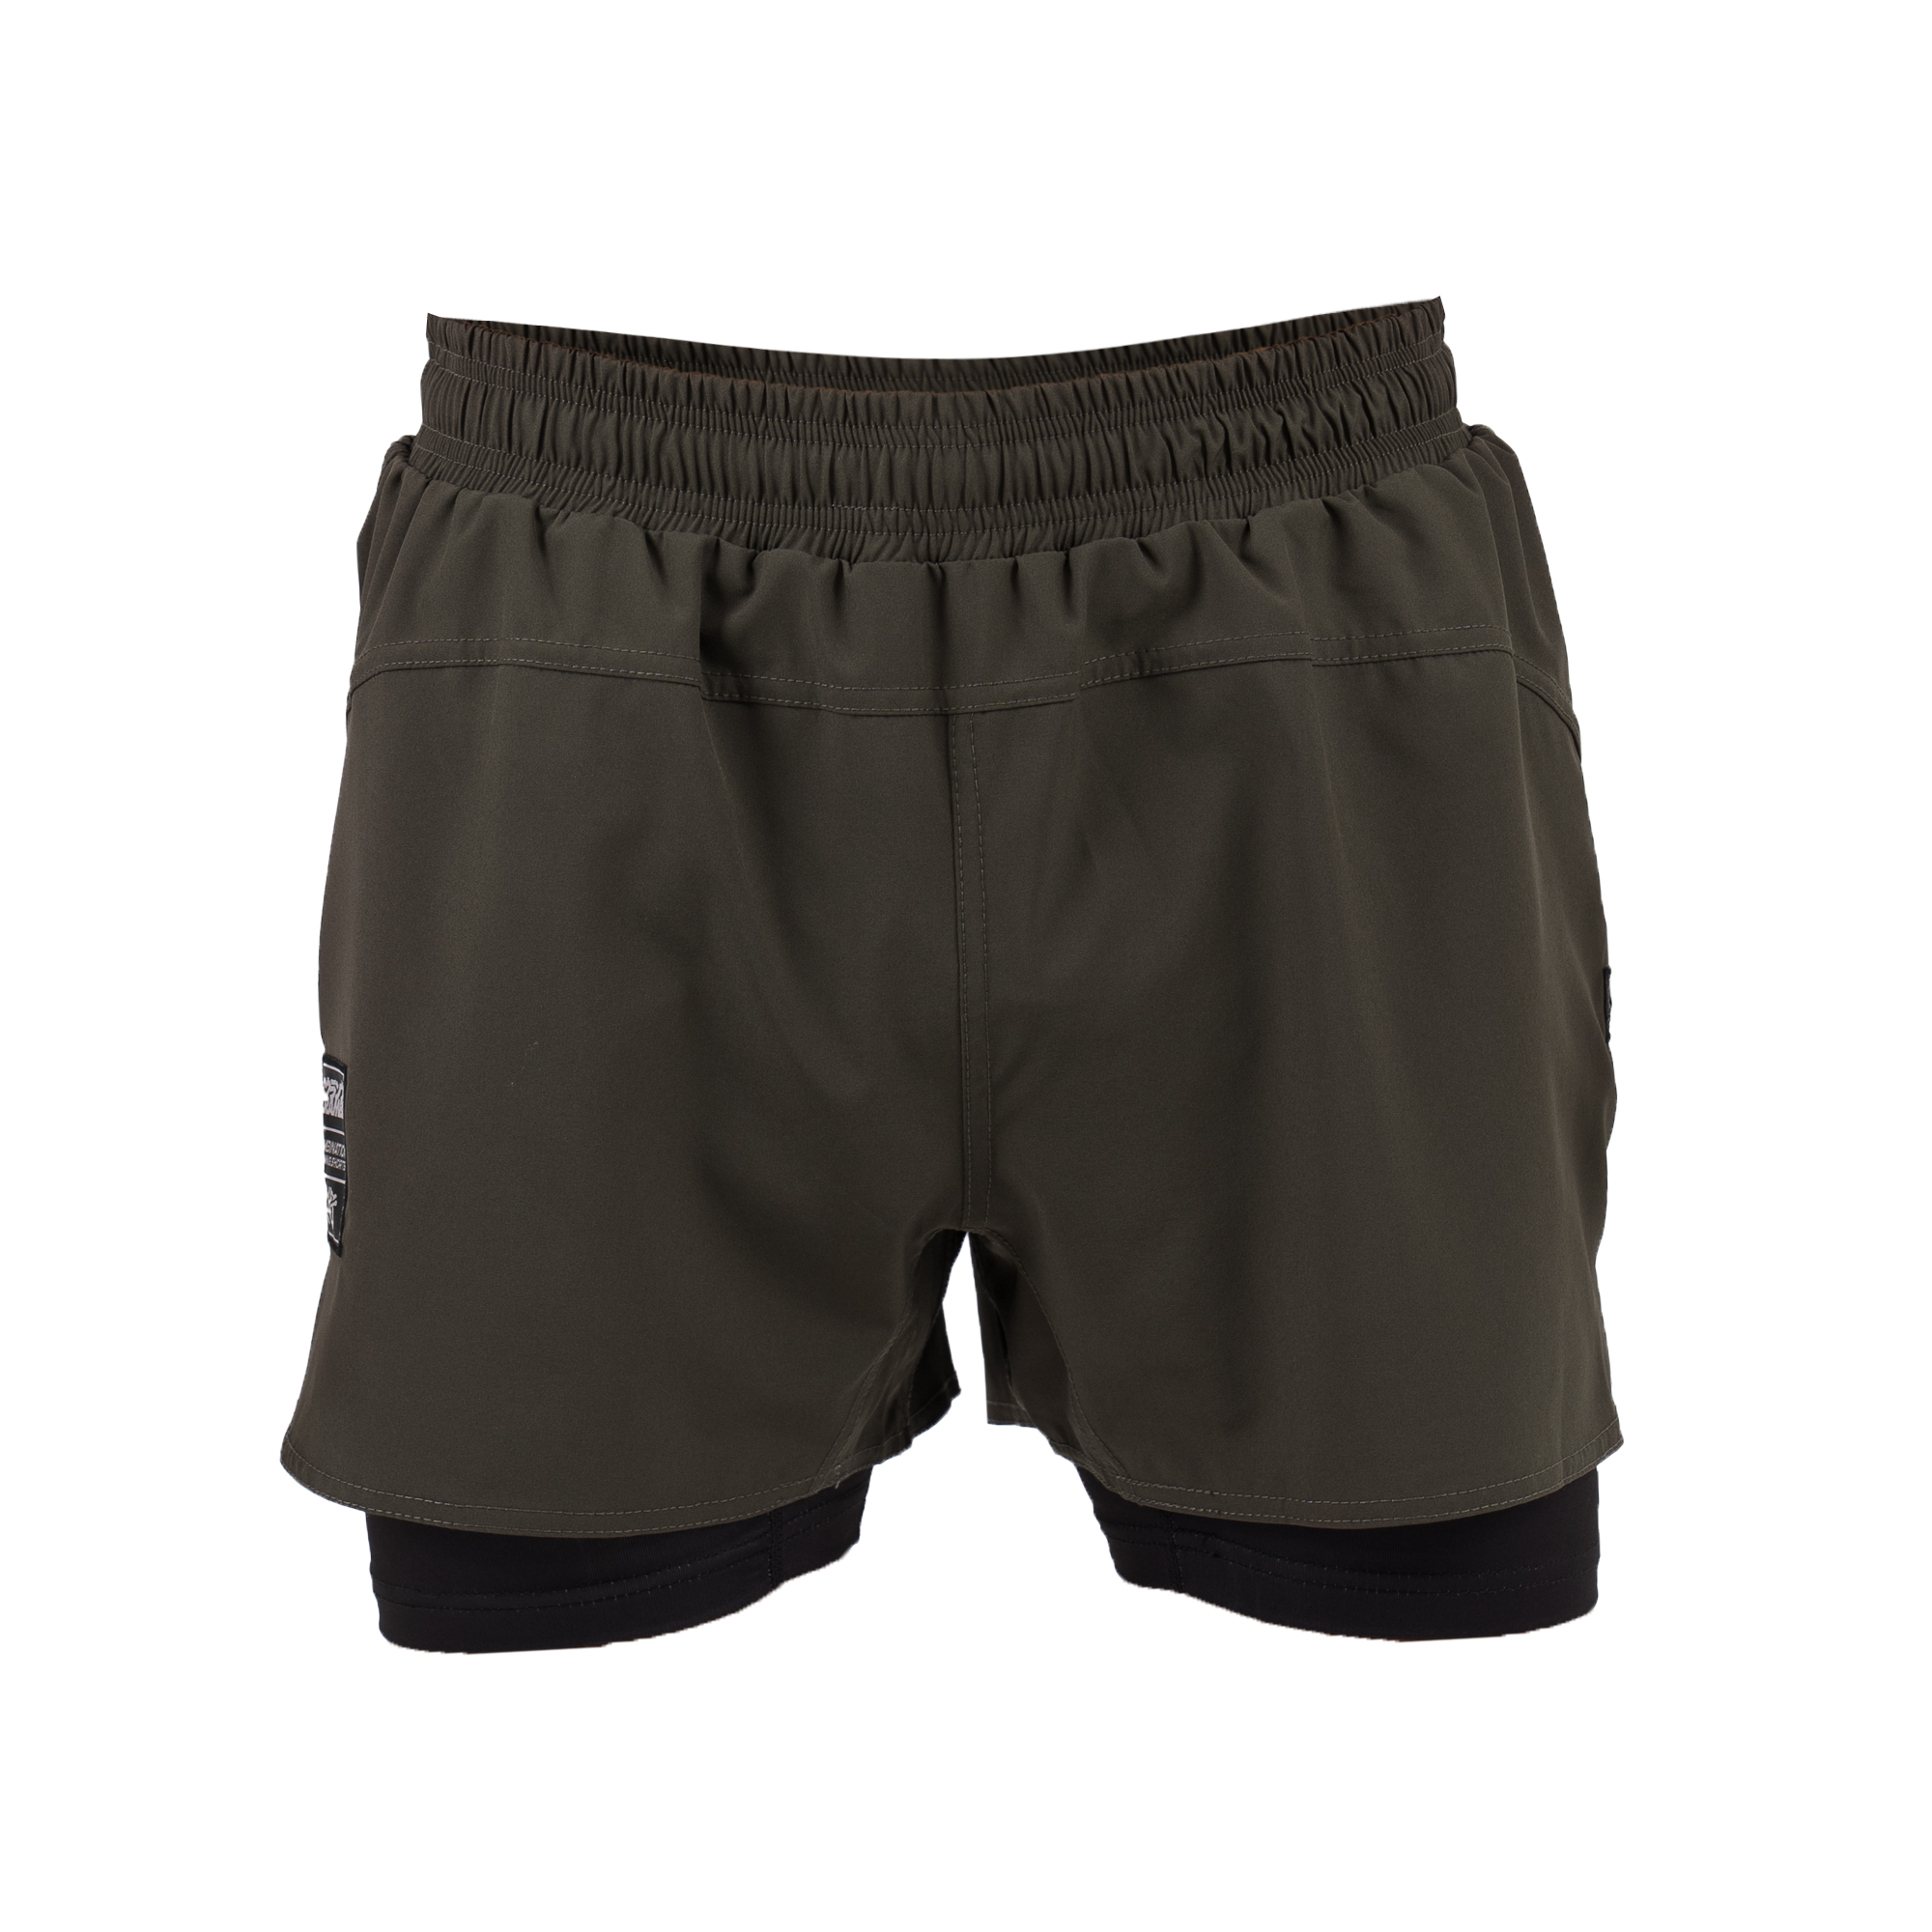 Combination Shorts - Khaki Green / Black